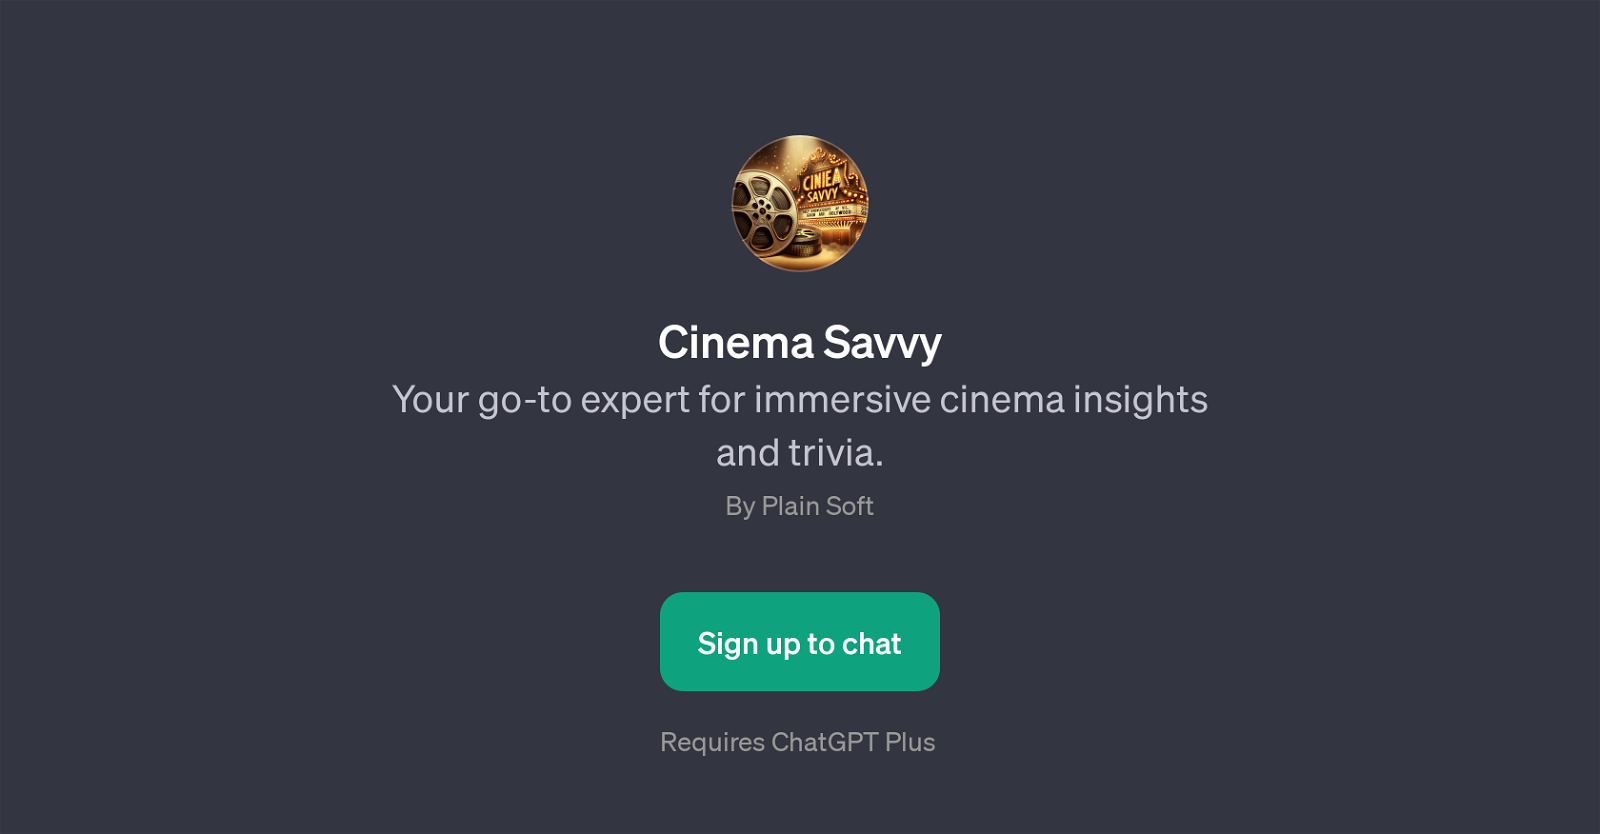 Cinema Savvy website